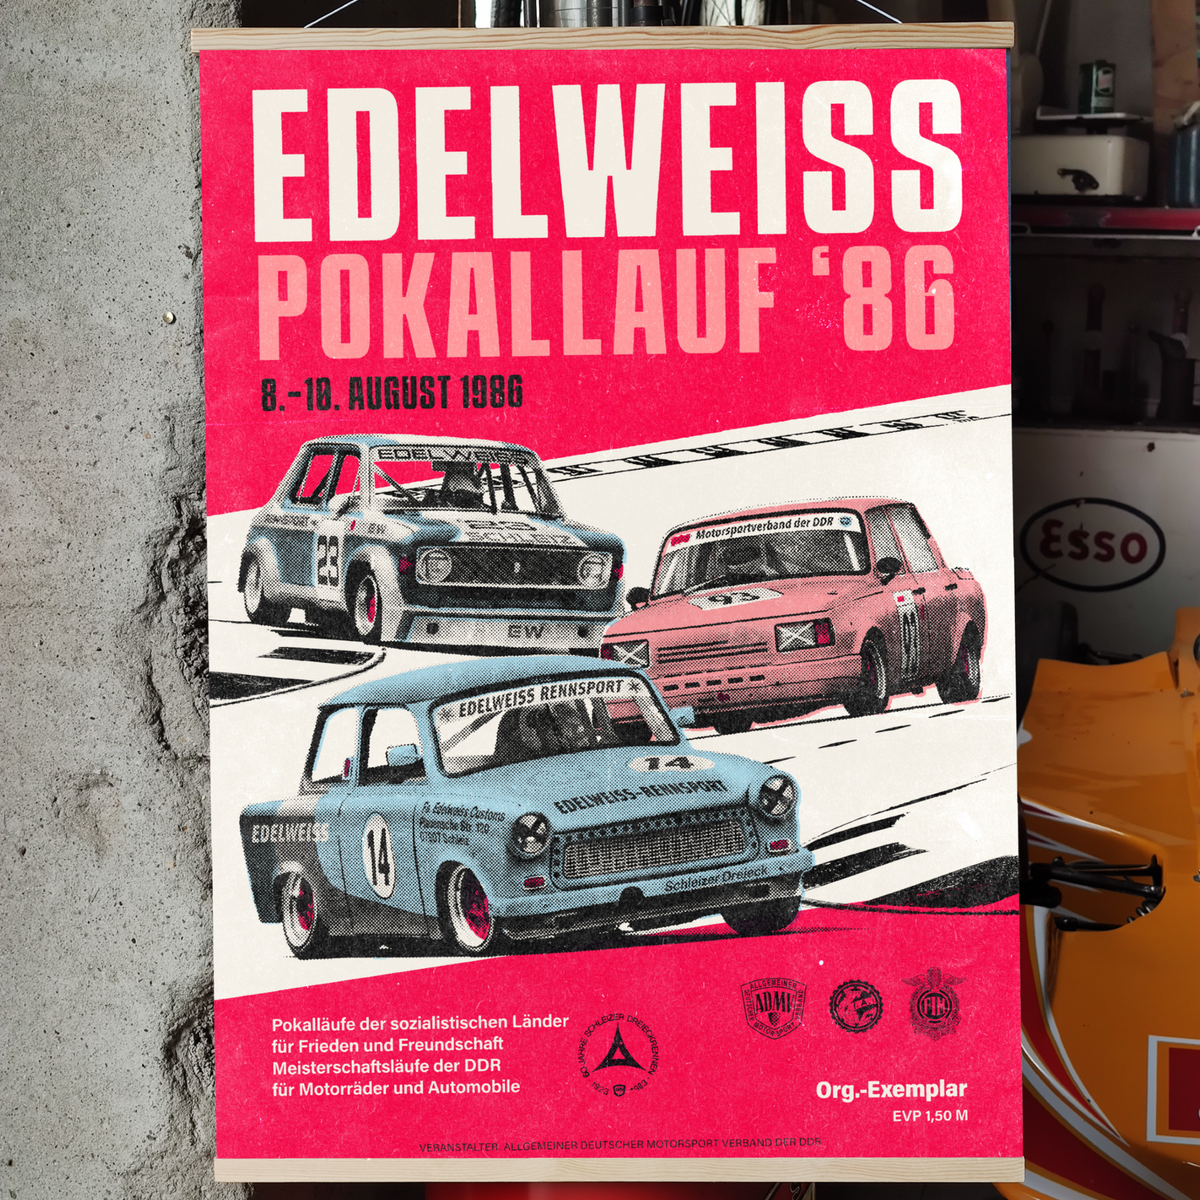 Edelweiss Pokallauf '86 Poster